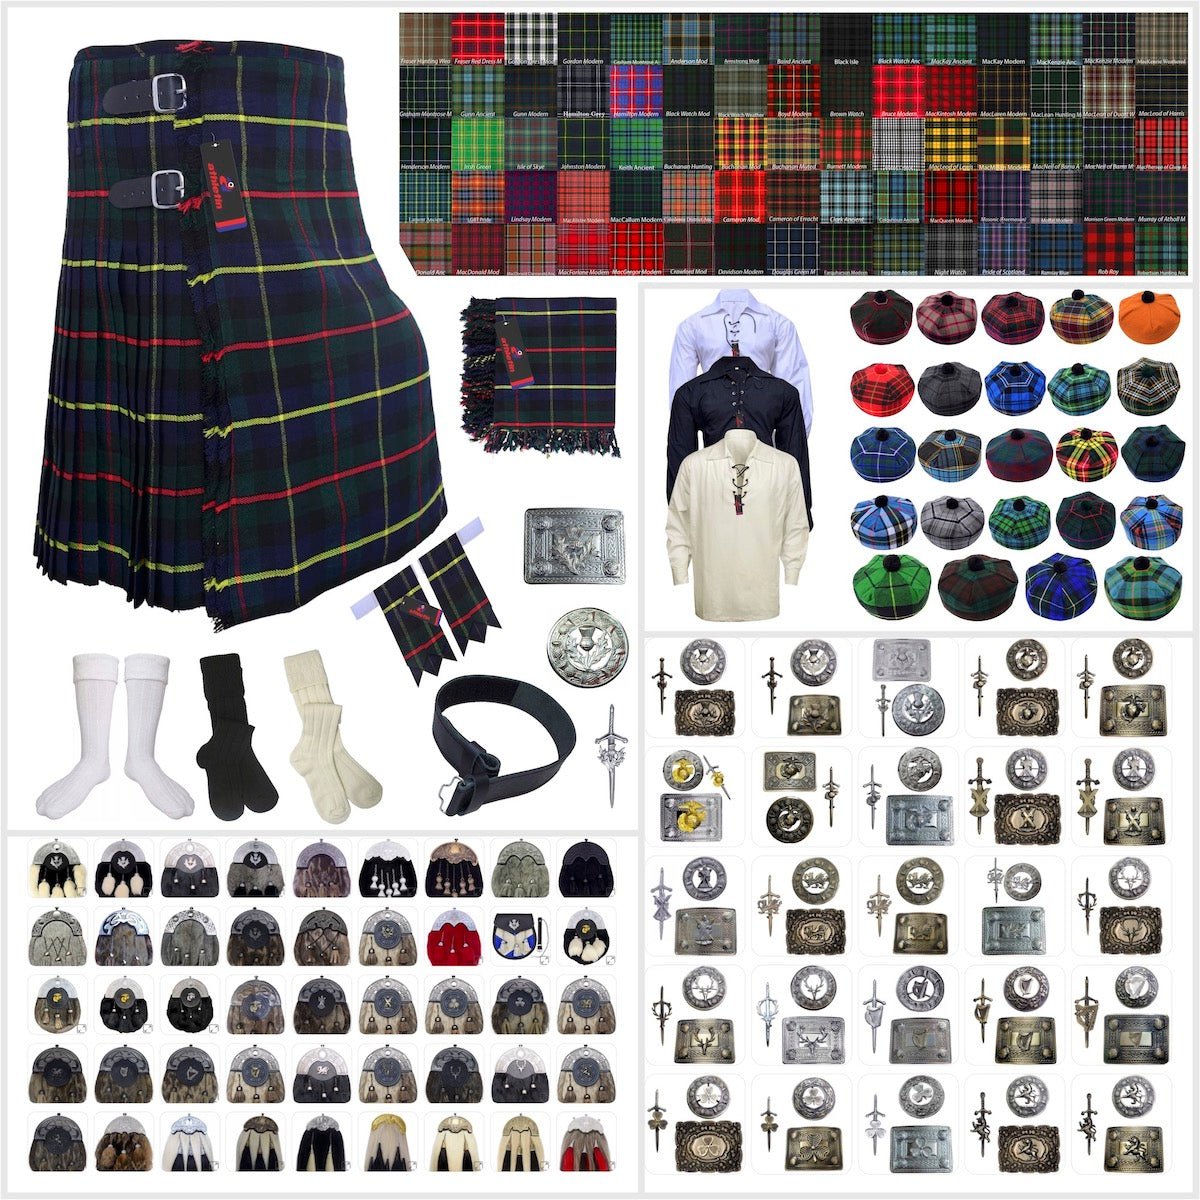 Macleod Tartan Kilt Outfit - Celebrating Clan Macleod's Heritage